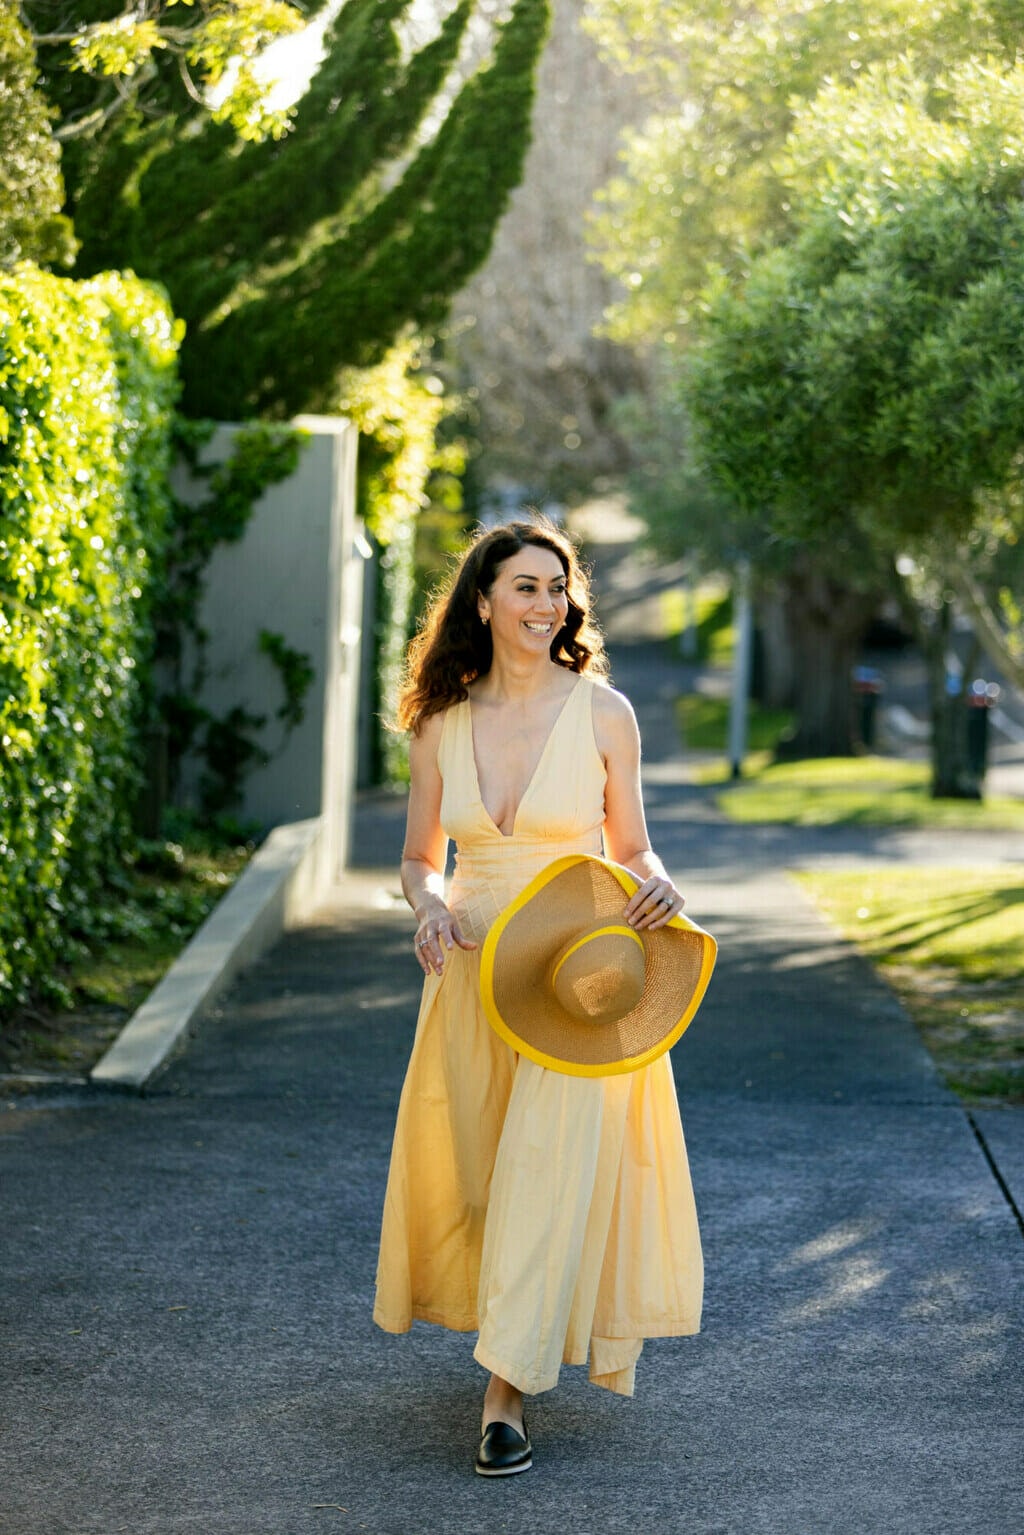 Miriama Kami walking down the street smiling. Miriama Kamo is wearing a yellow dress and holding a yellow straw hat. 